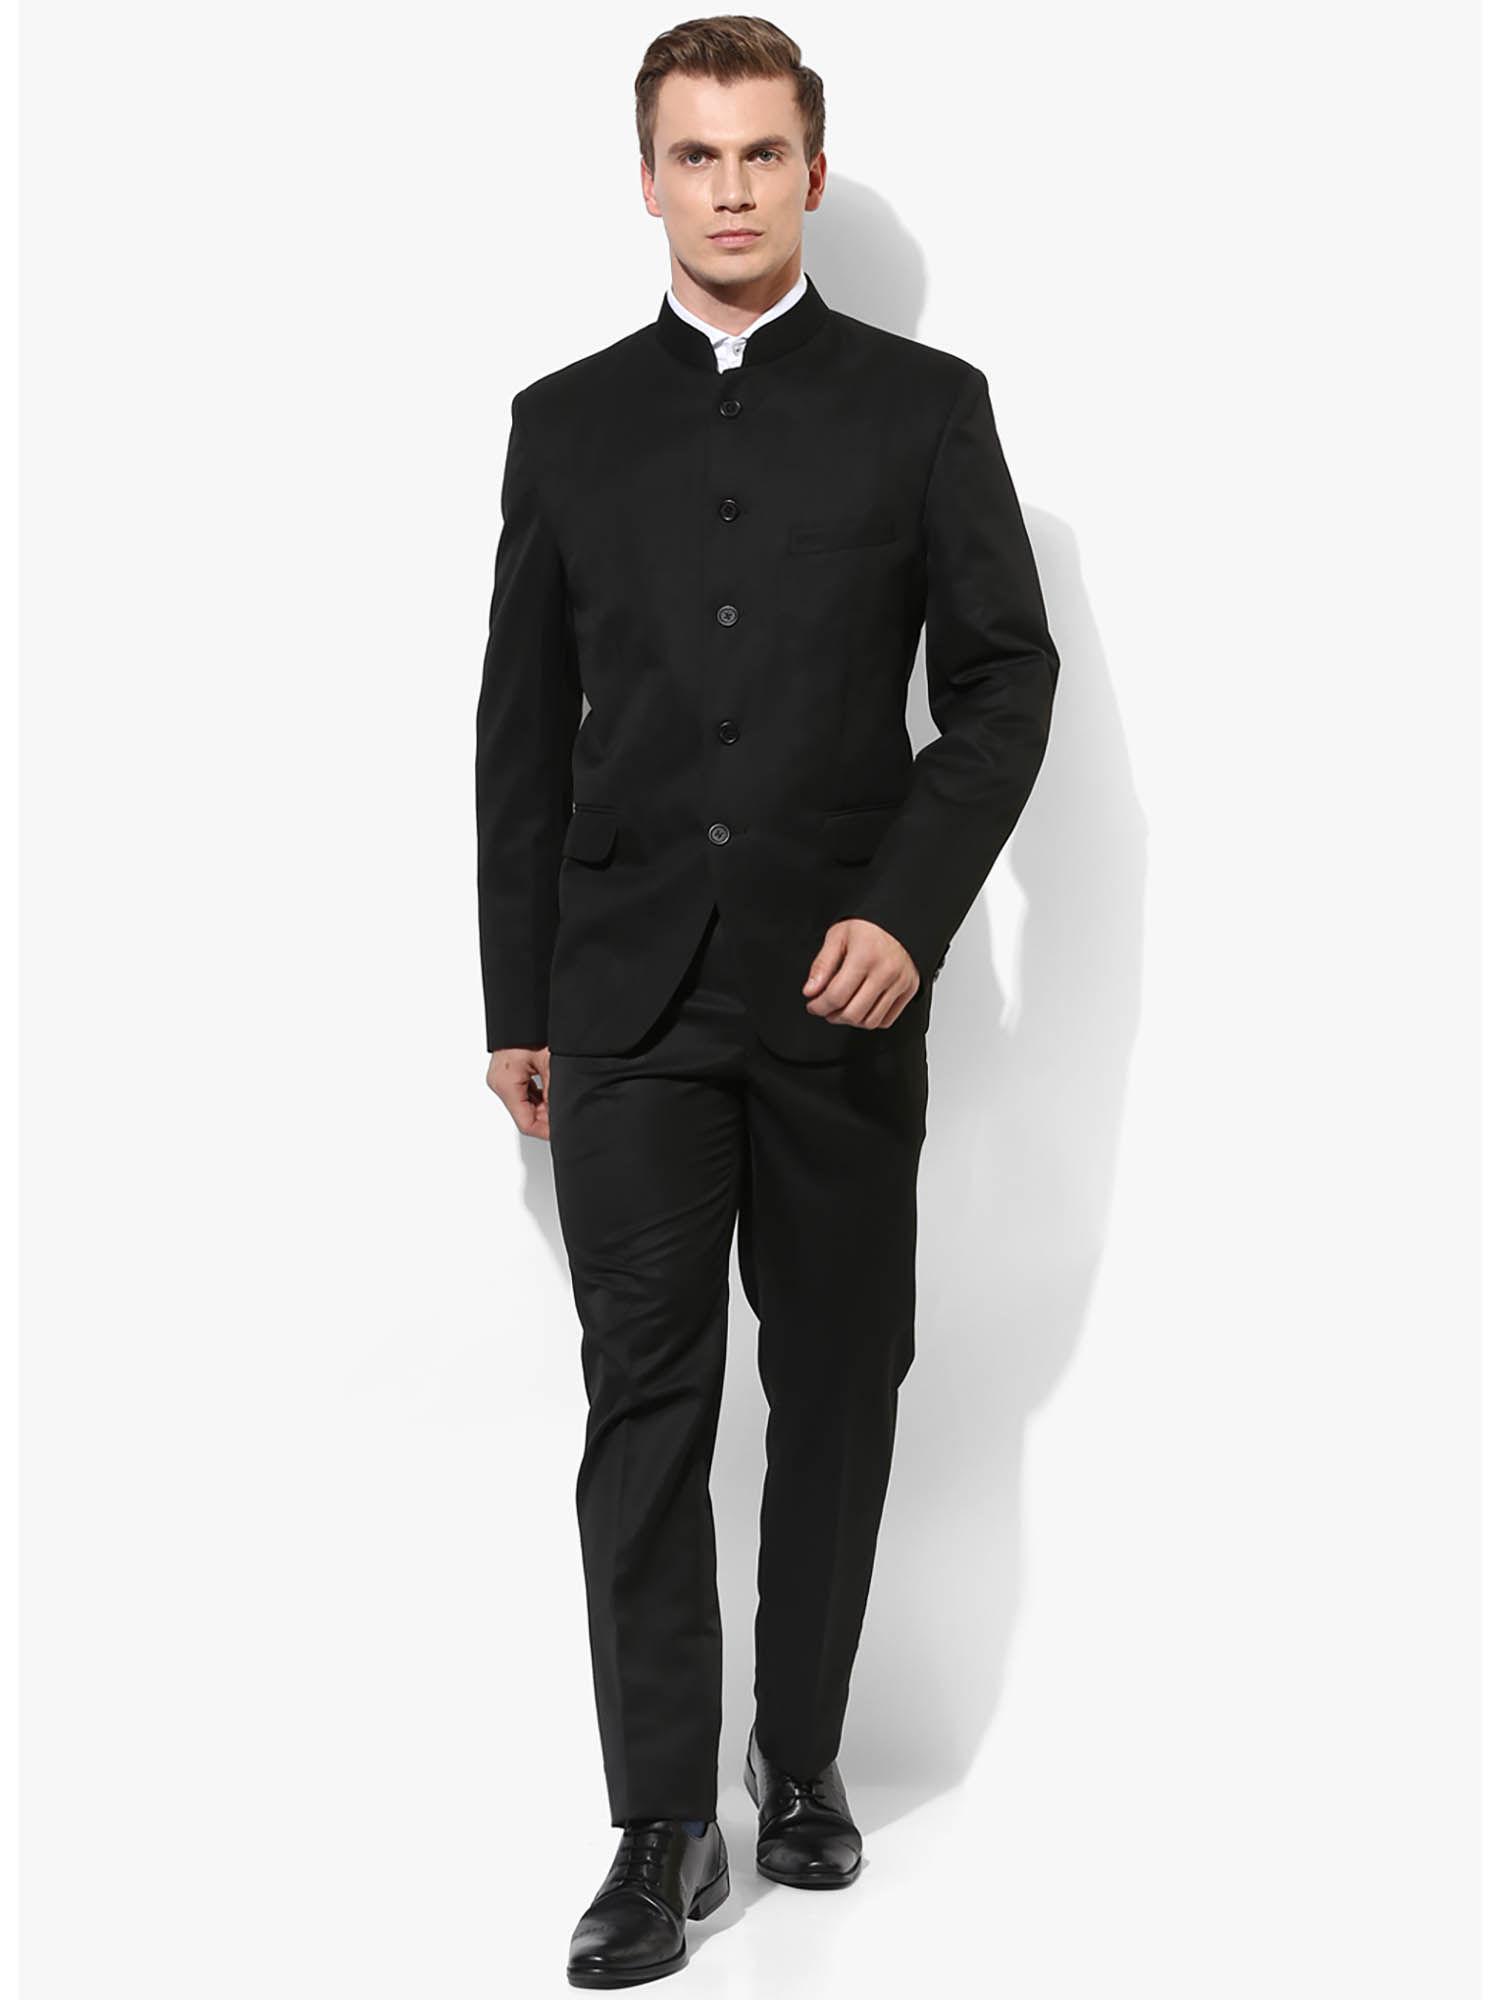 solid black coat suit